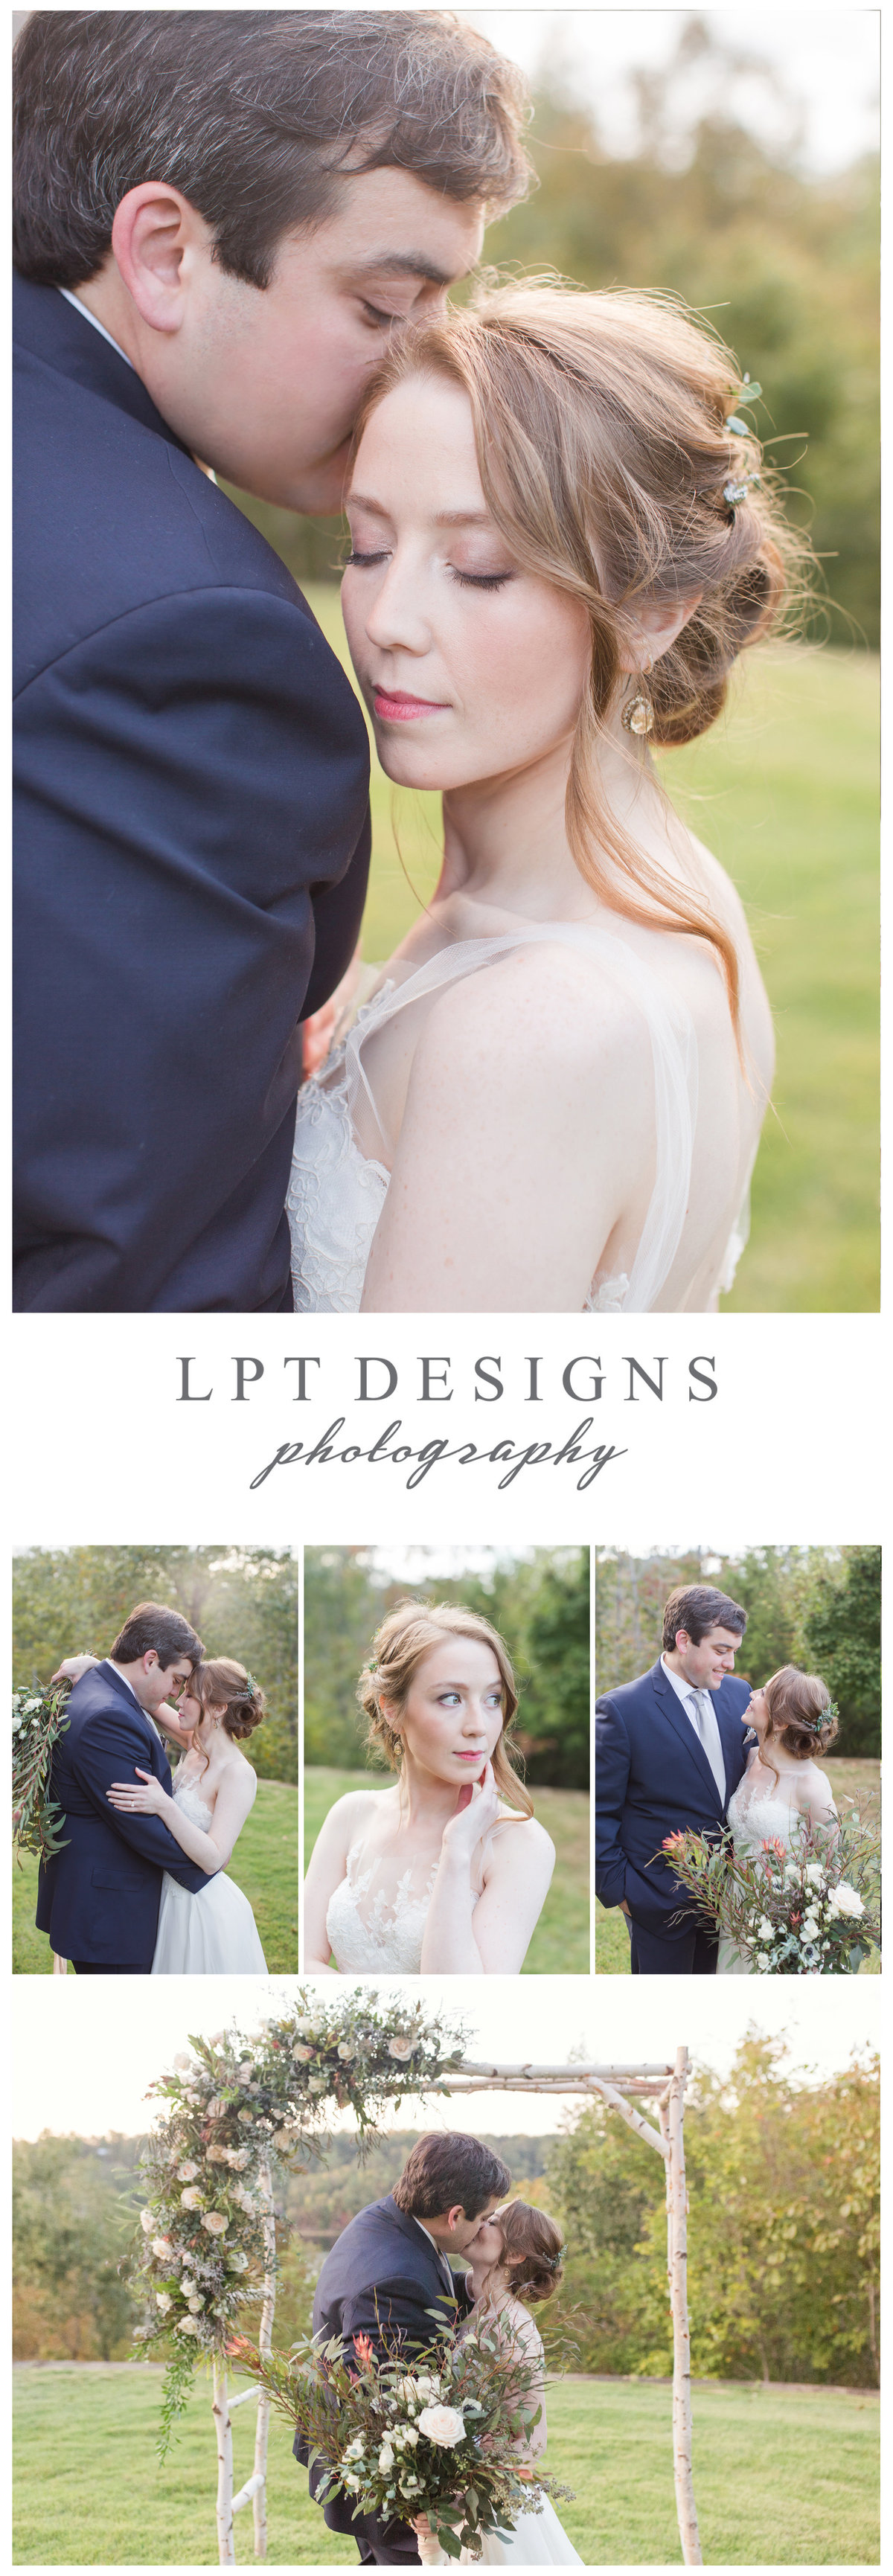 lpt_designs_photography_lydia_thrift_gadsden_alabama_fine_art_wedding_photographer_jw_1